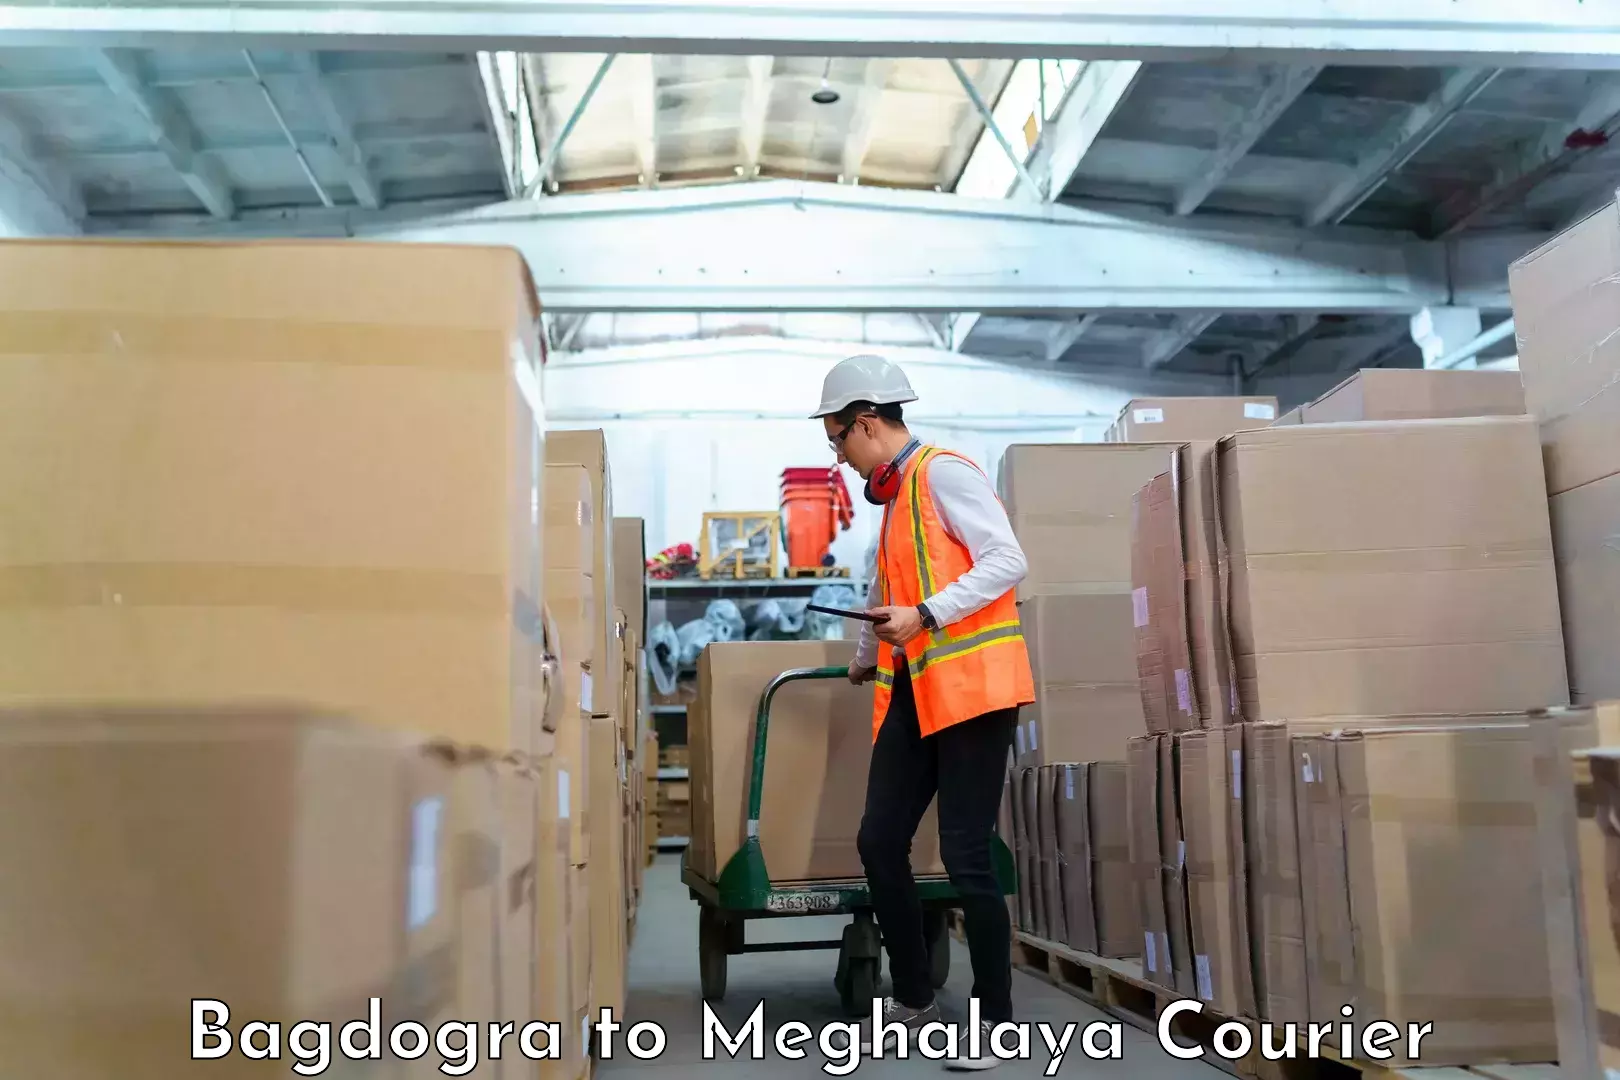 Baggage delivery planning Bagdogra to Meghalaya